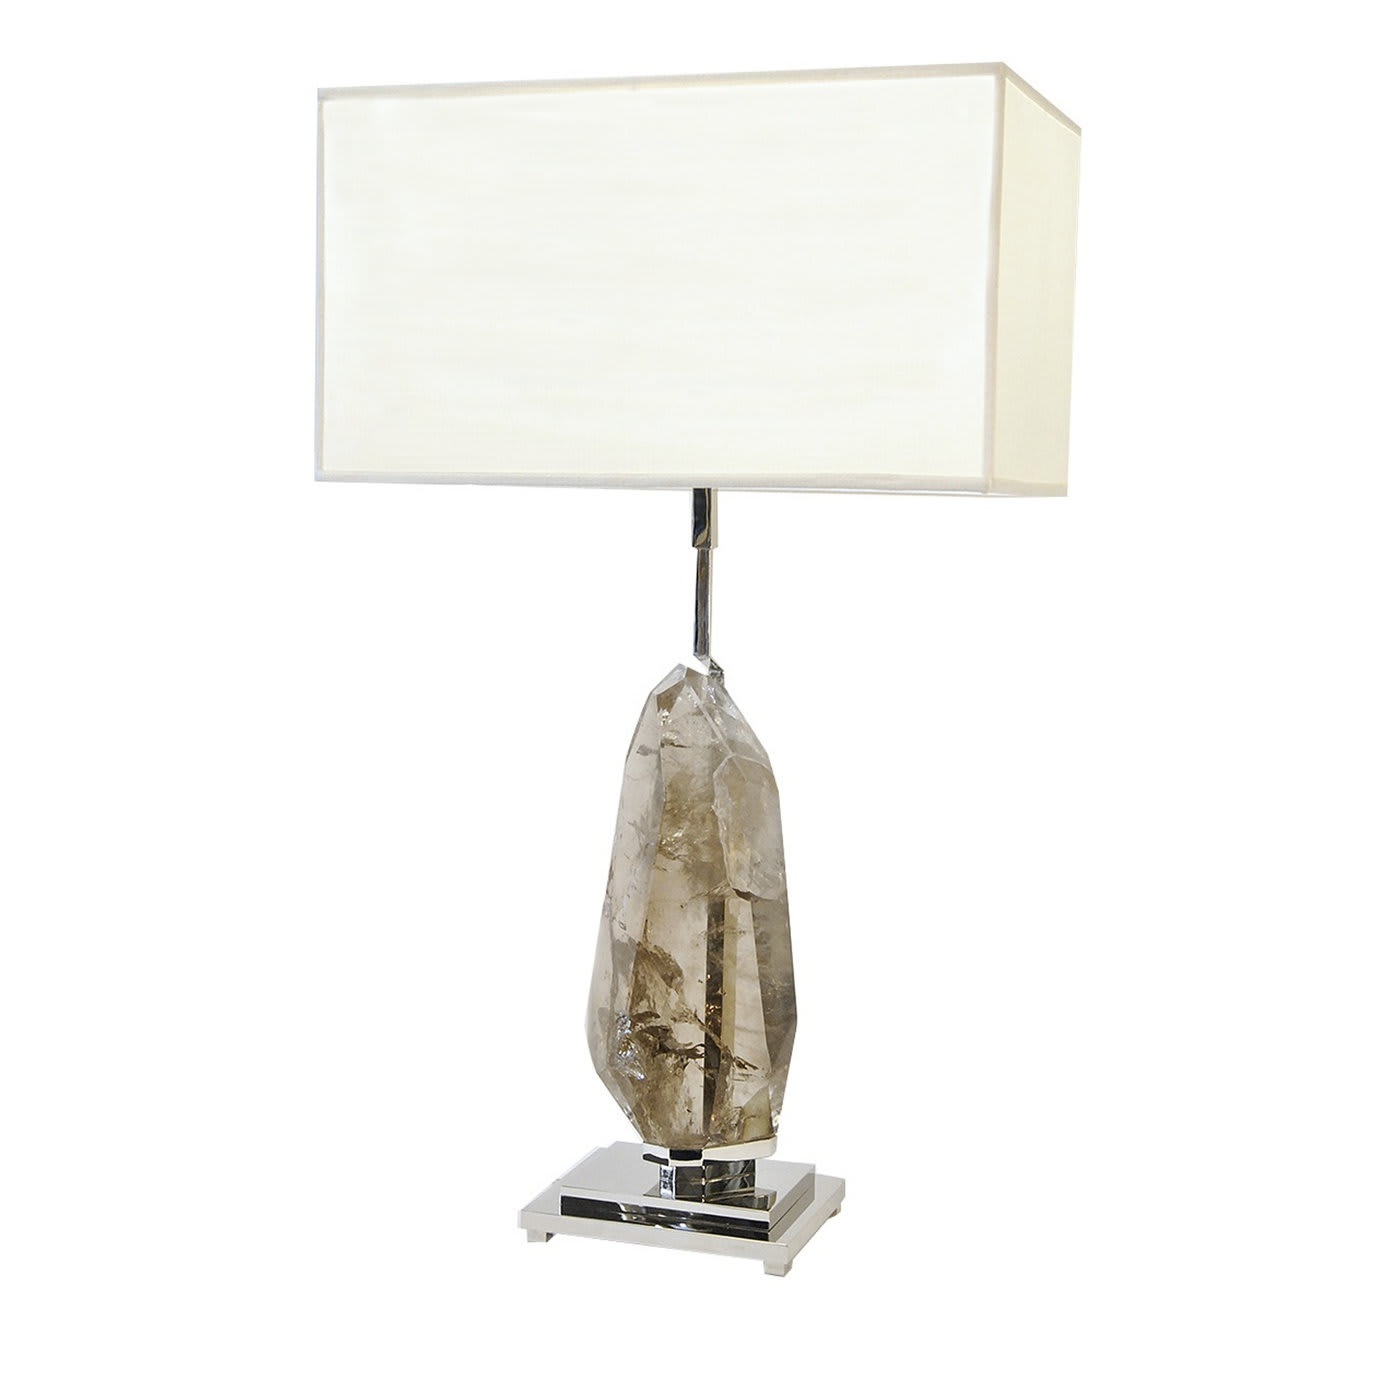 Smoky Quartz Table Lamp  - Giuliano Tincani